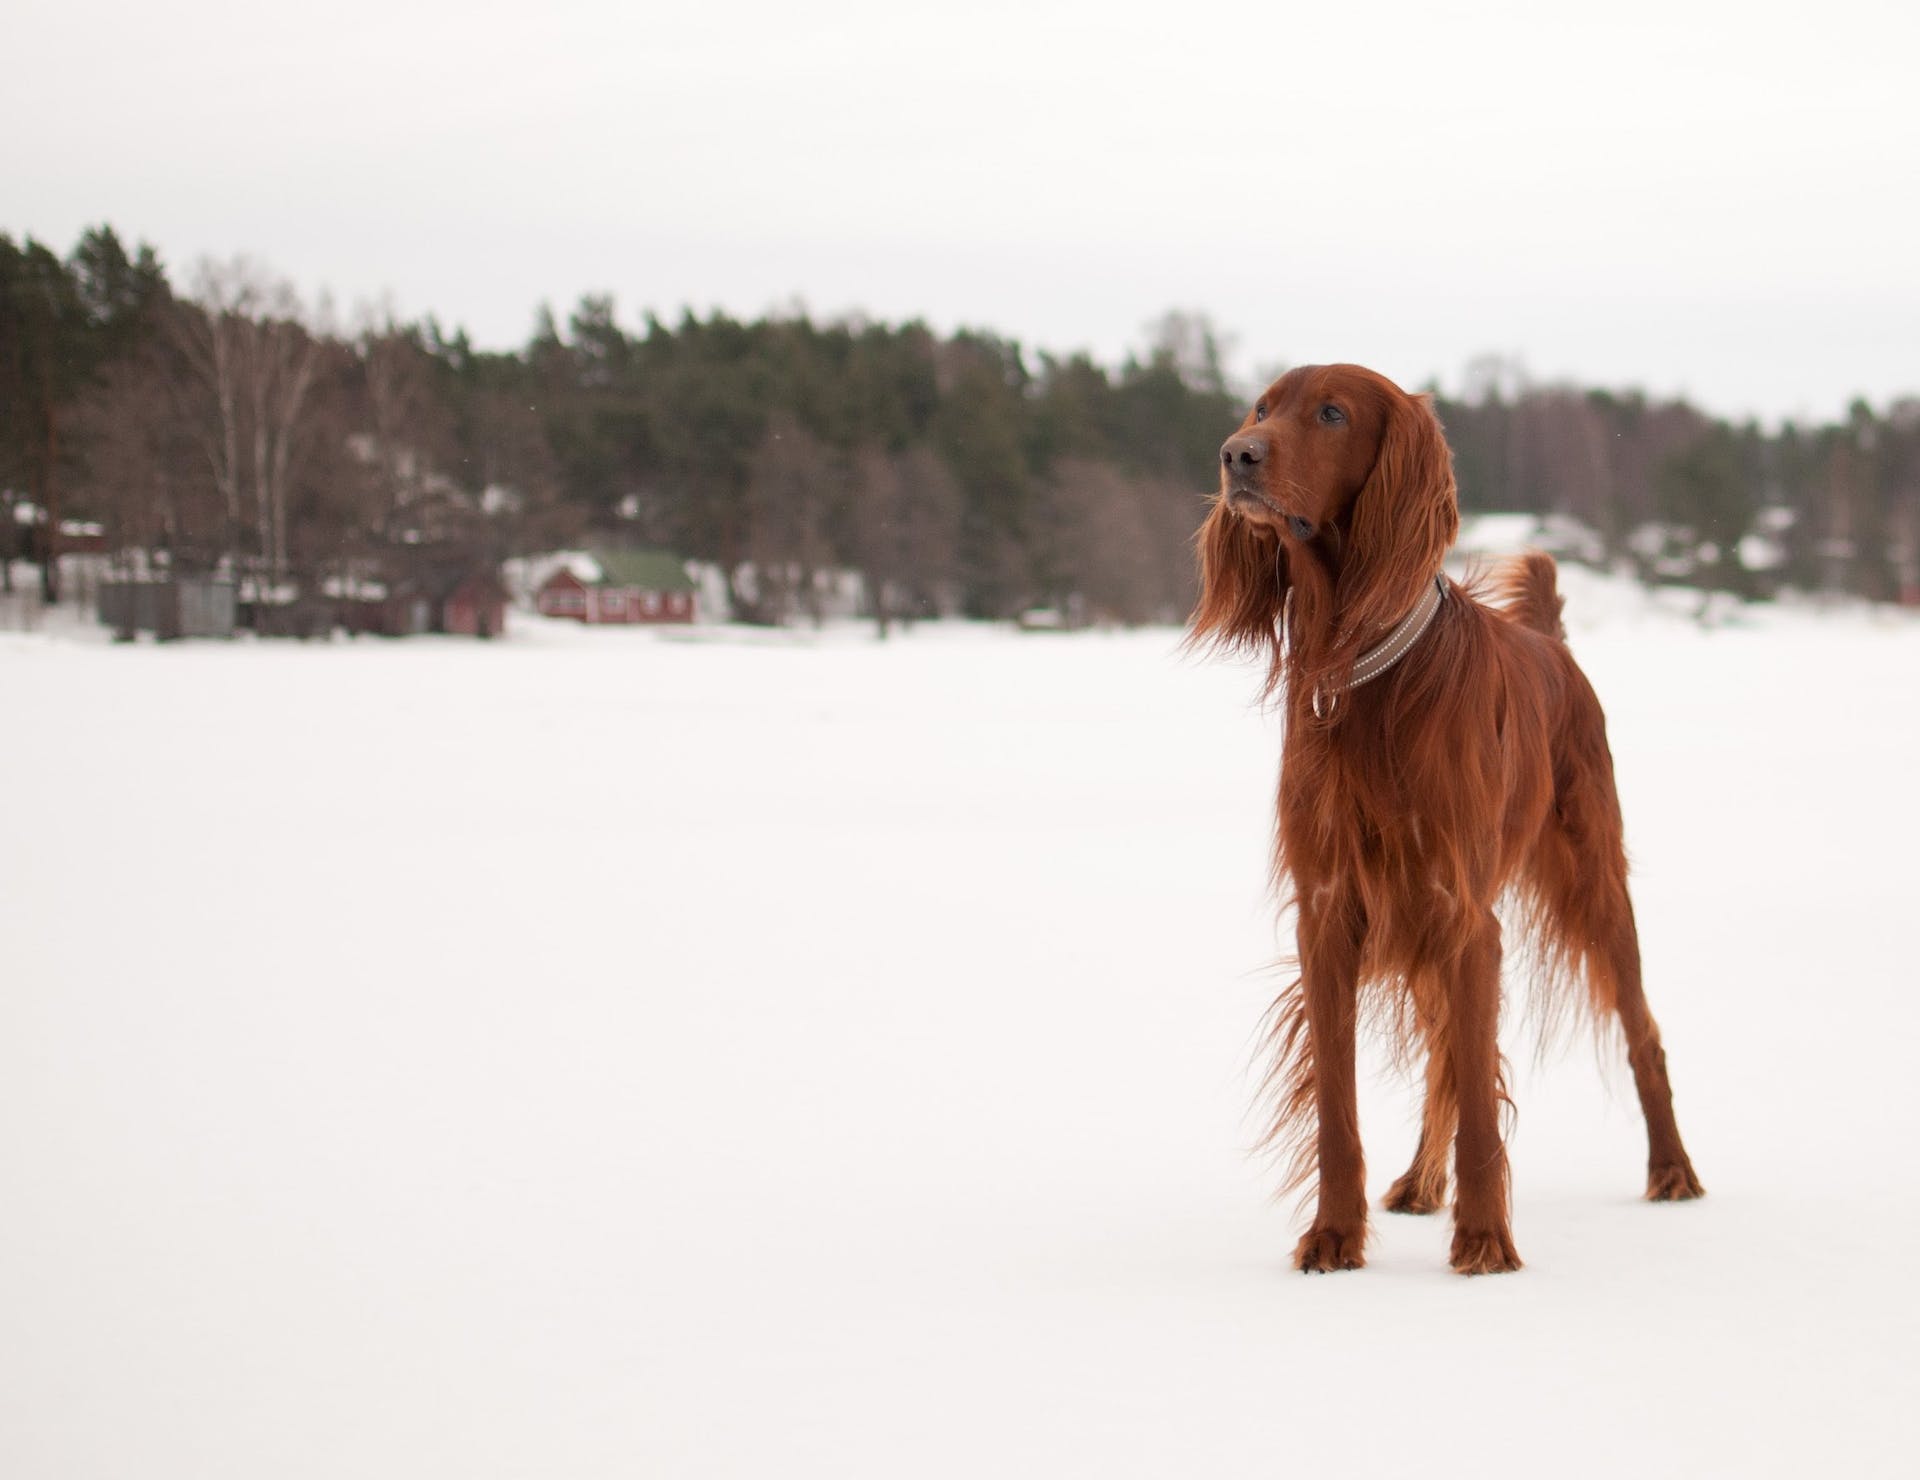 Irish Setter dog standing in a snowy field